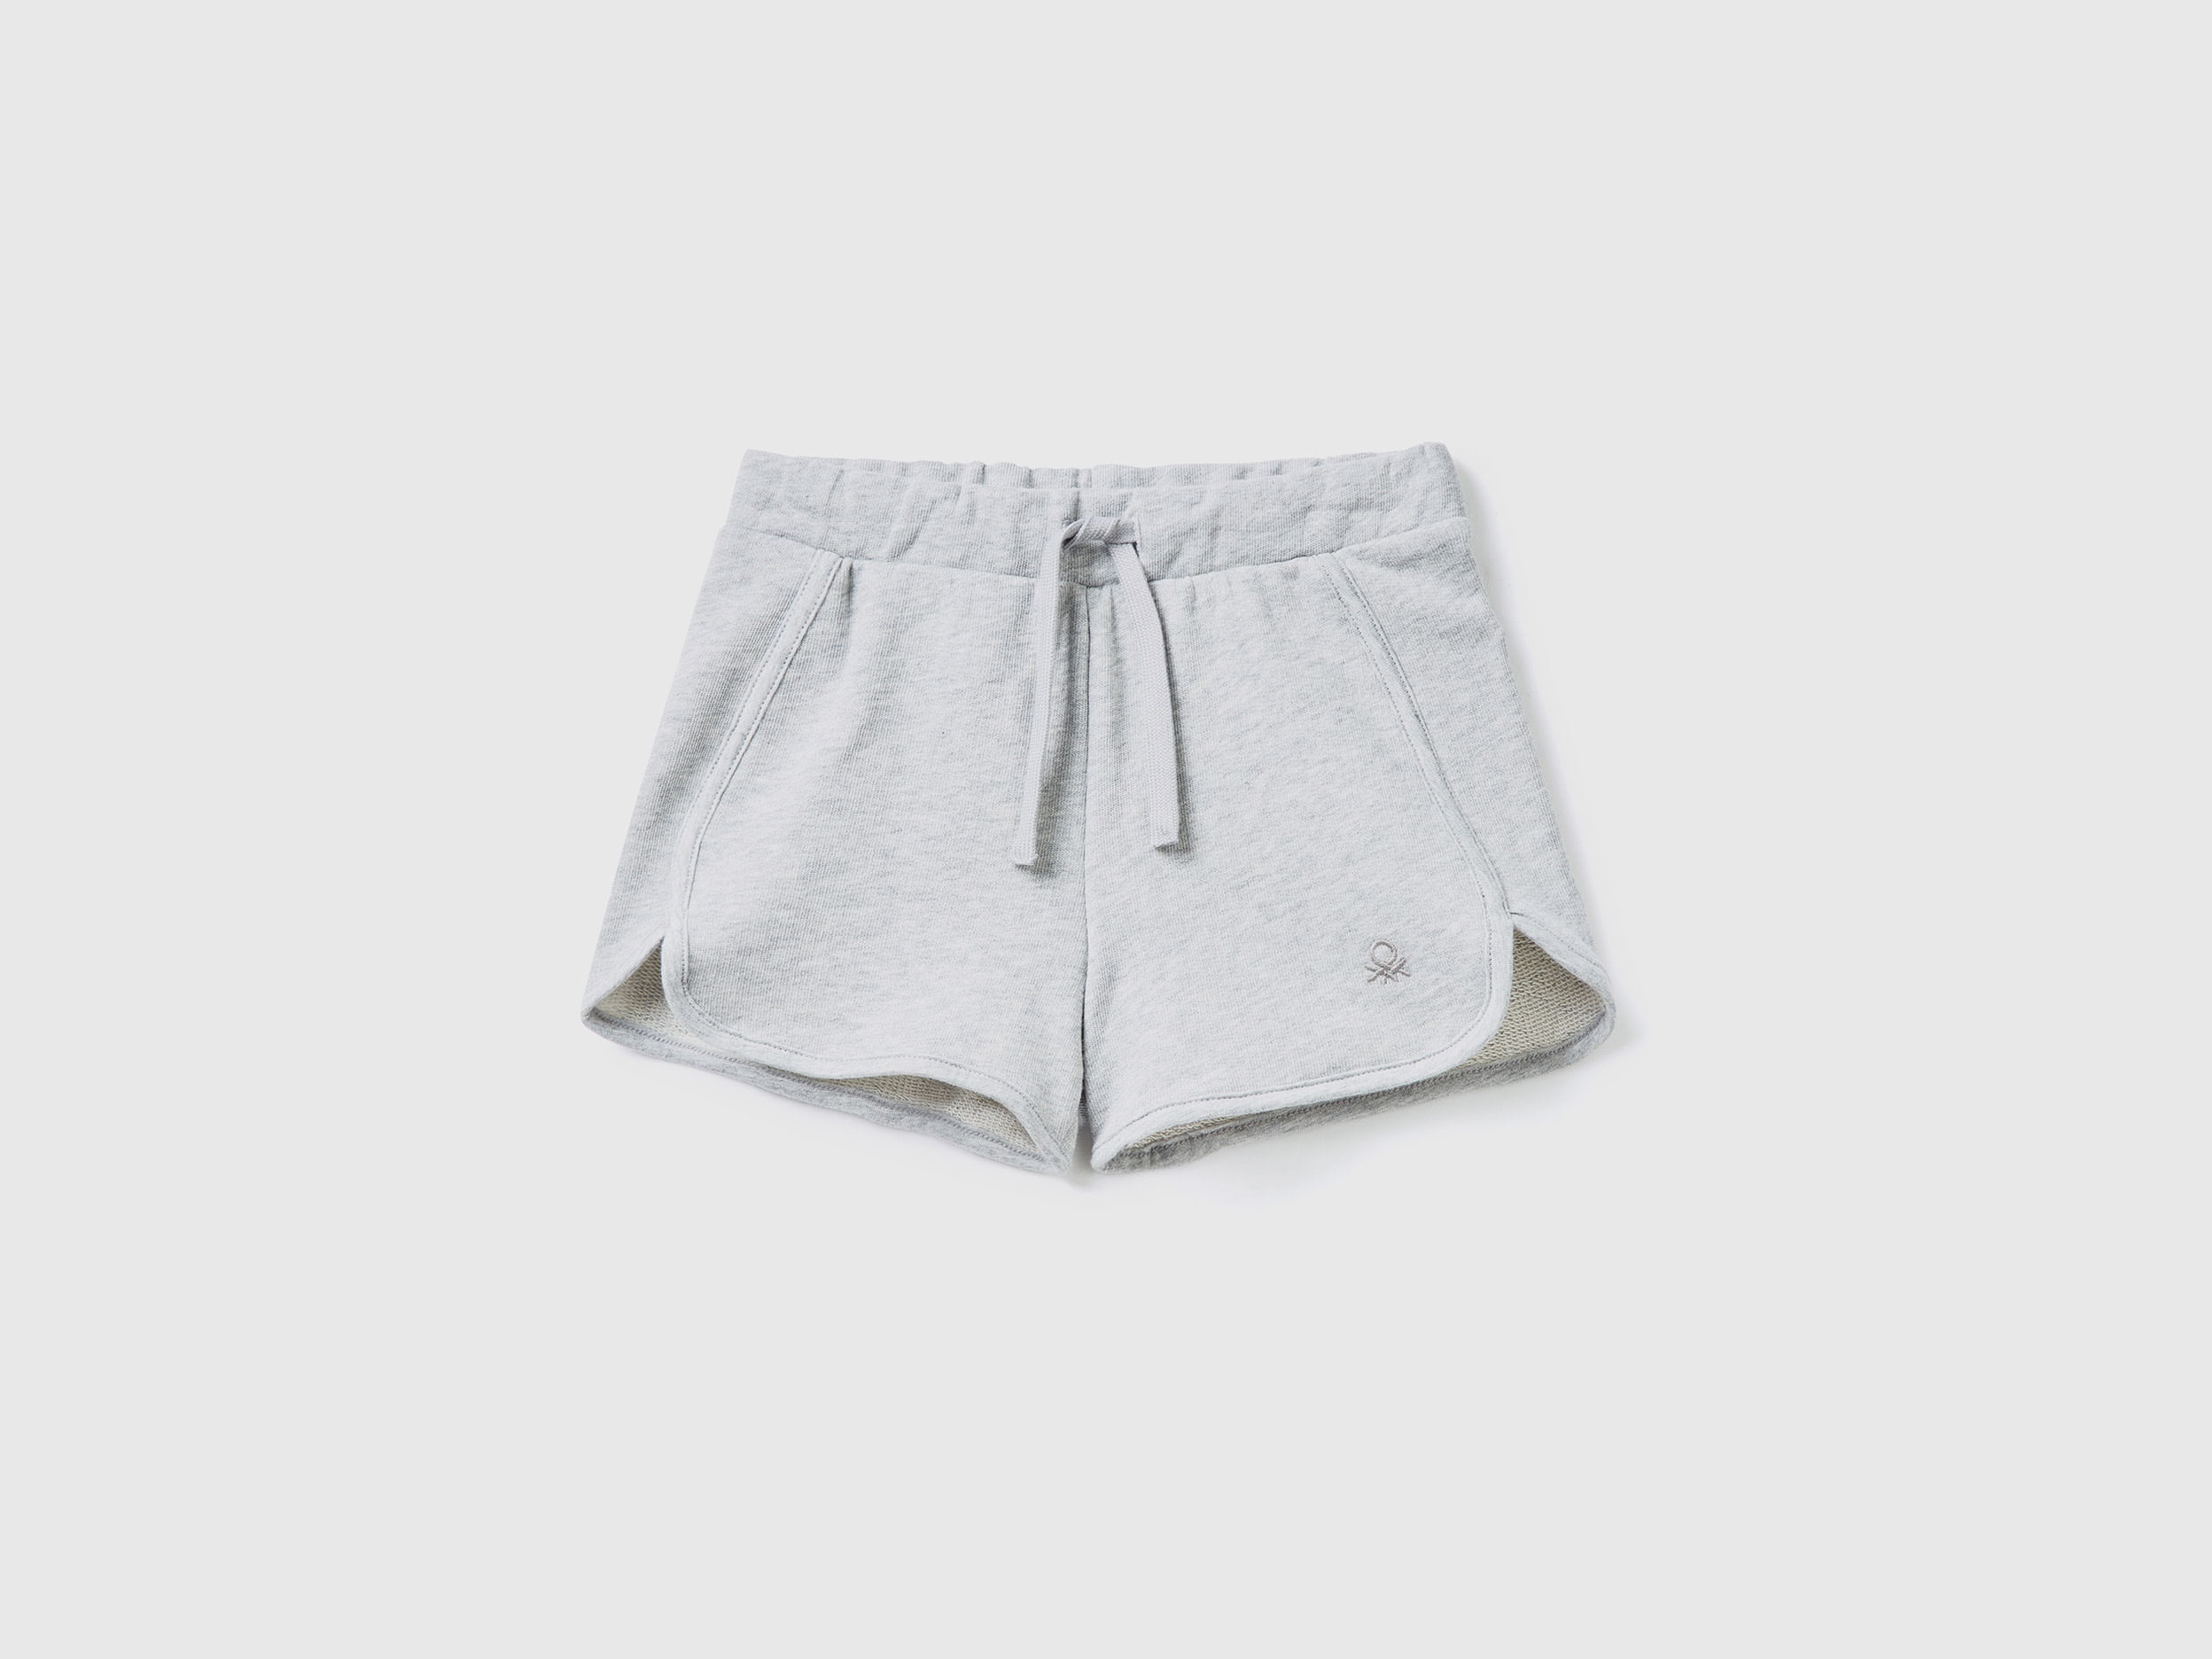 Benetton, Sweat Shorts In 100% Organic Cotton, size 5-6, Light Gray, Kids